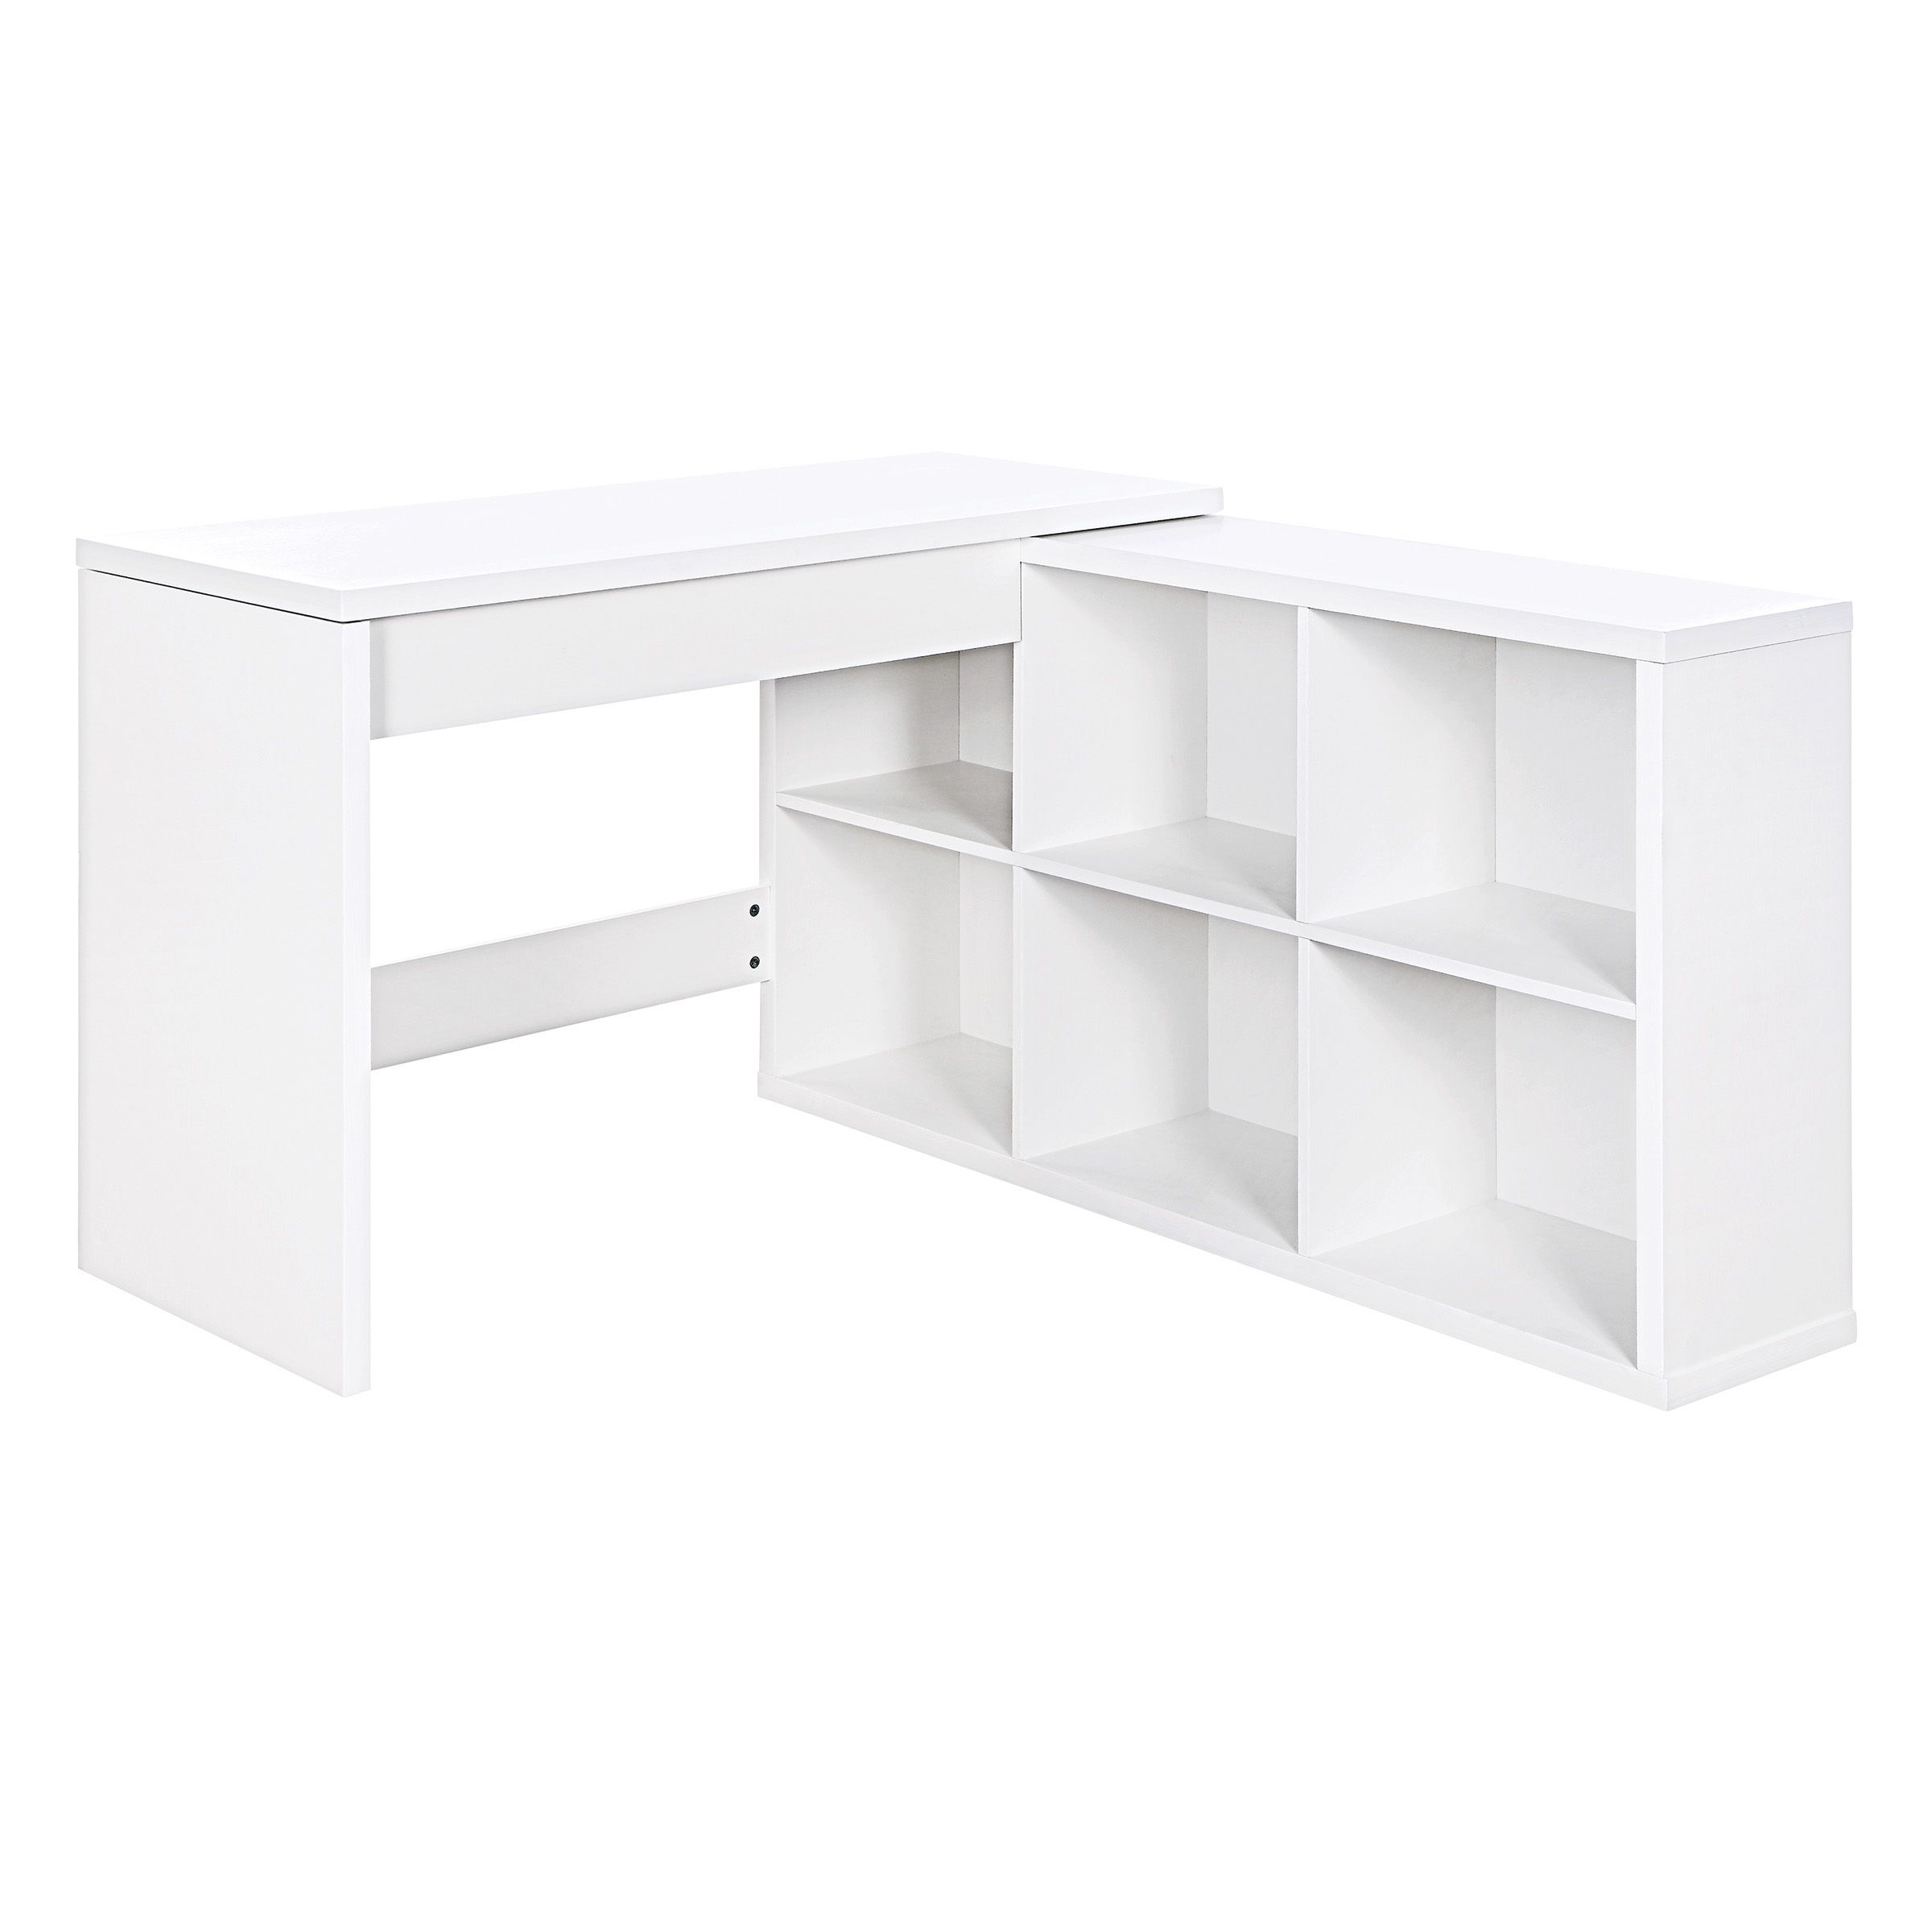 Horizon L shape Modular Office Table with Storage (Exotic Teak Frosty White)